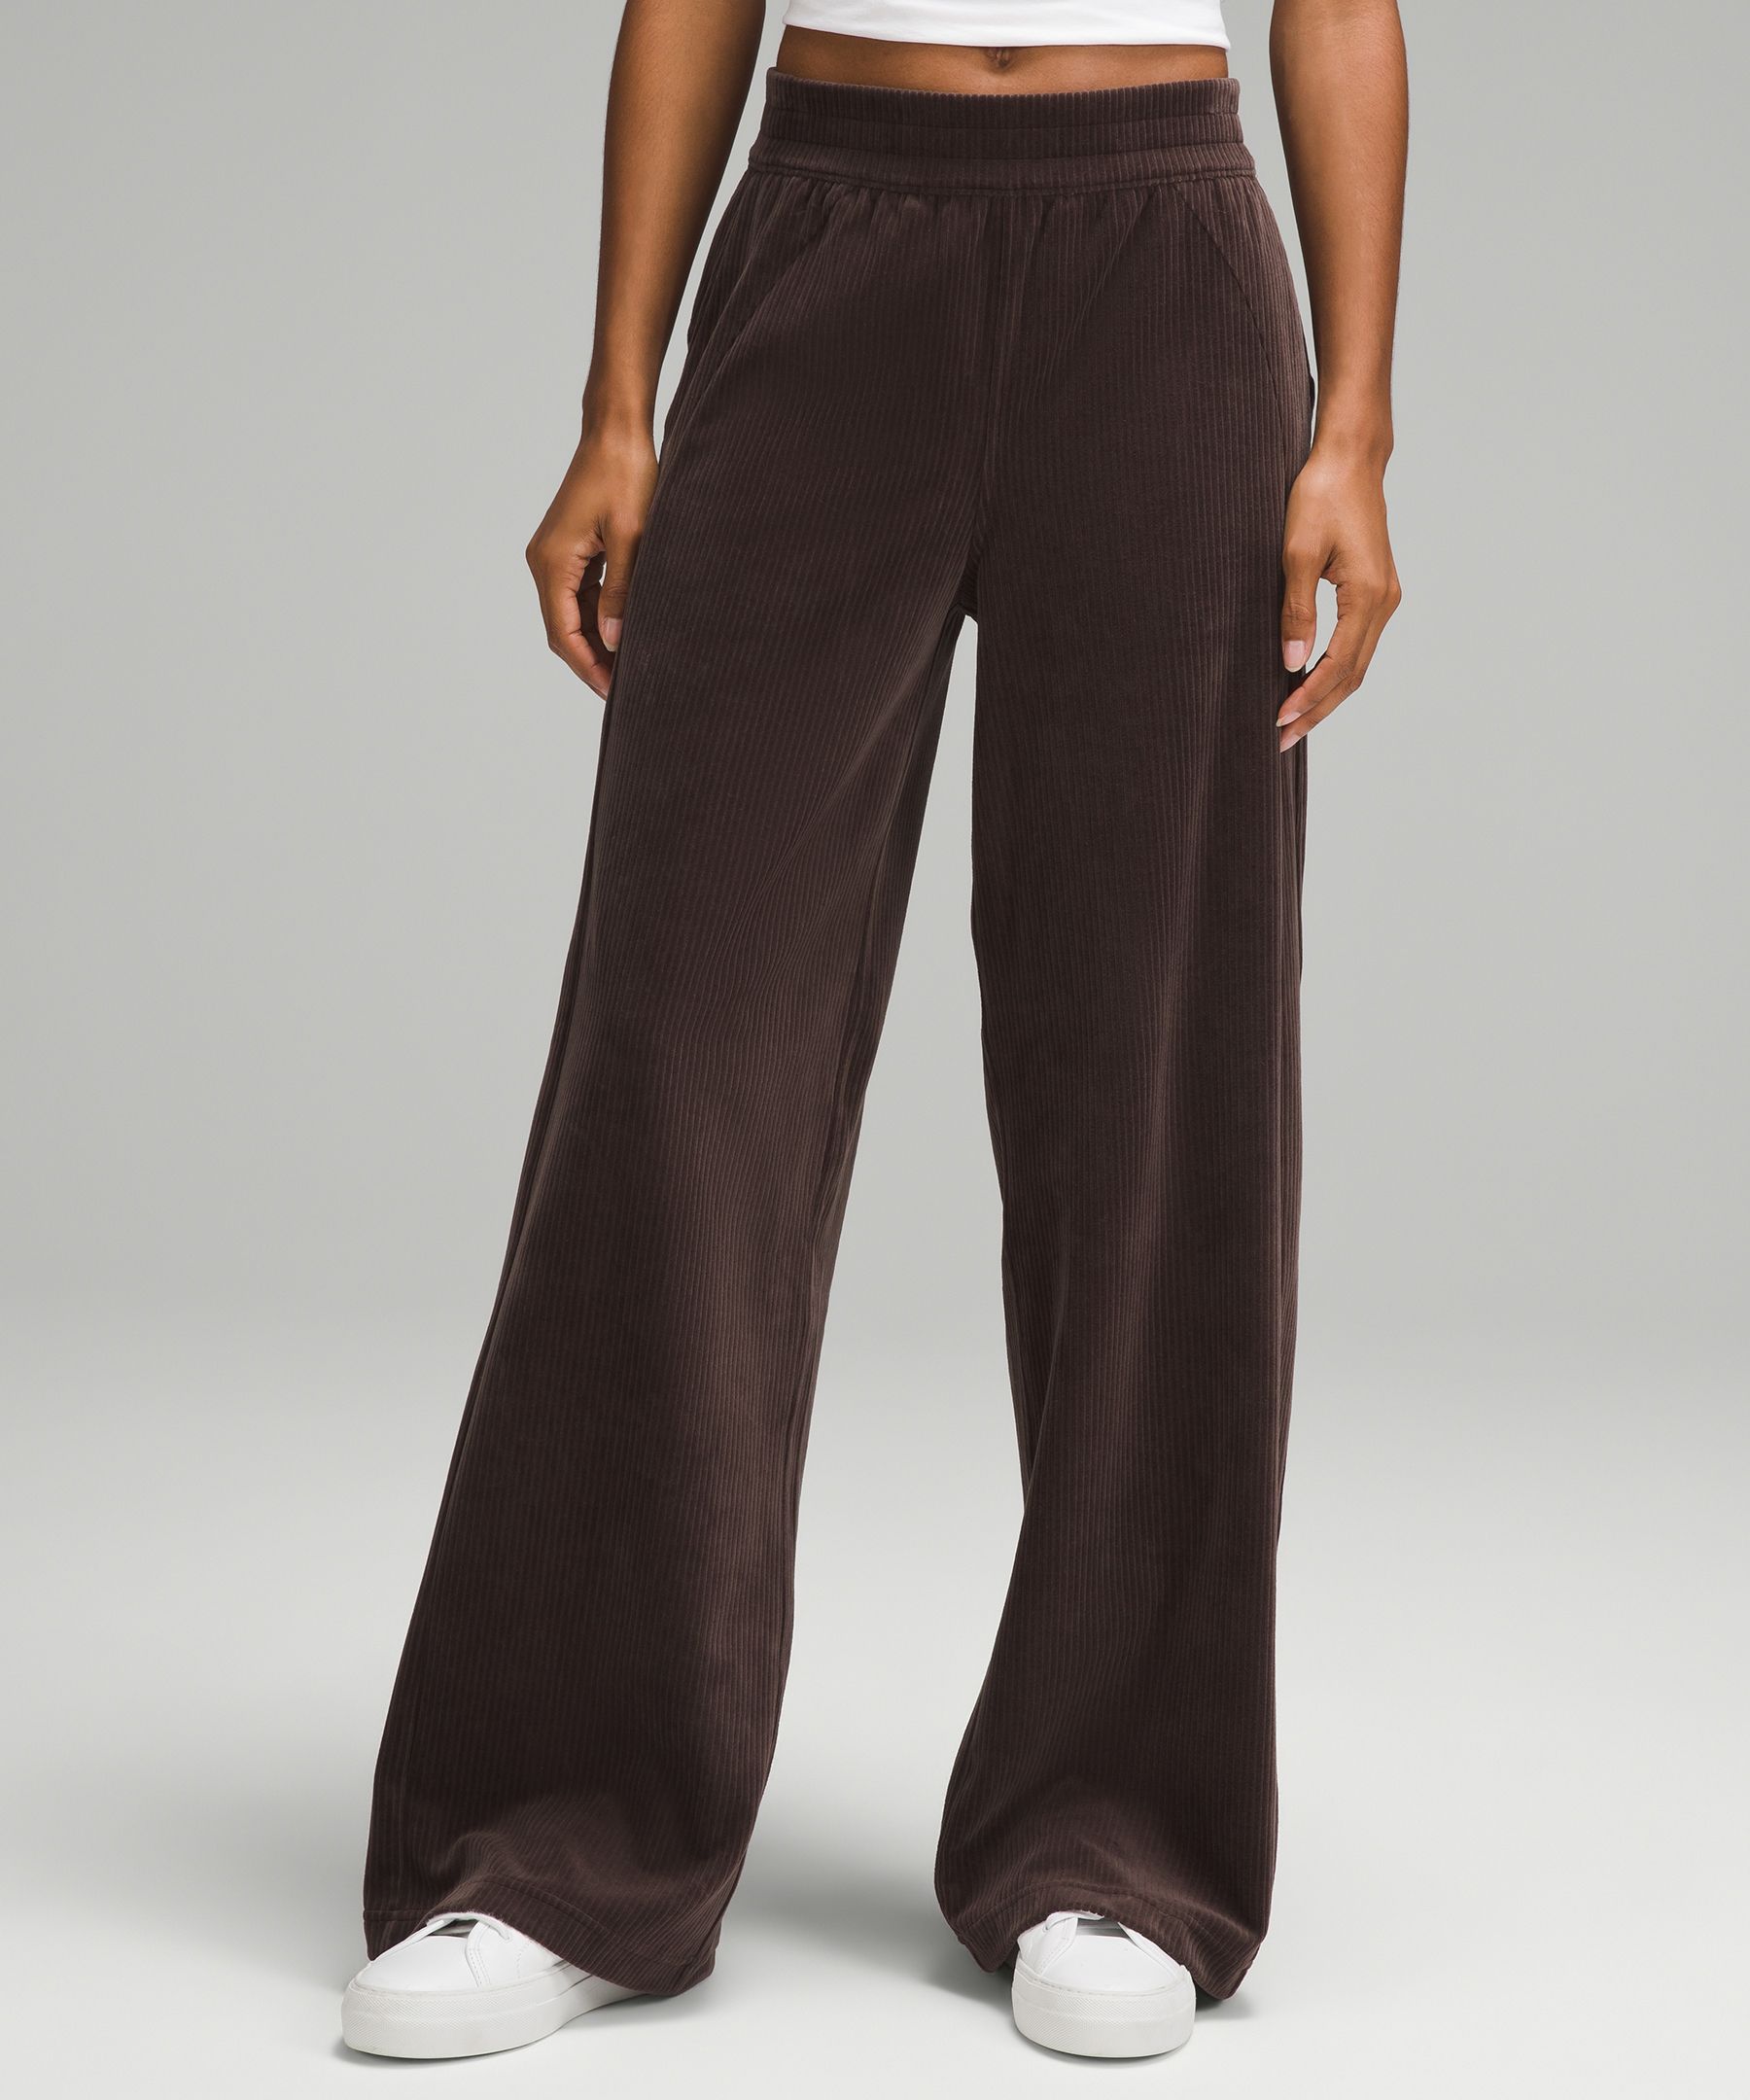 Lululemon Wide Leg Crop Sweatpants Size 2 - $33 - From Maryclare